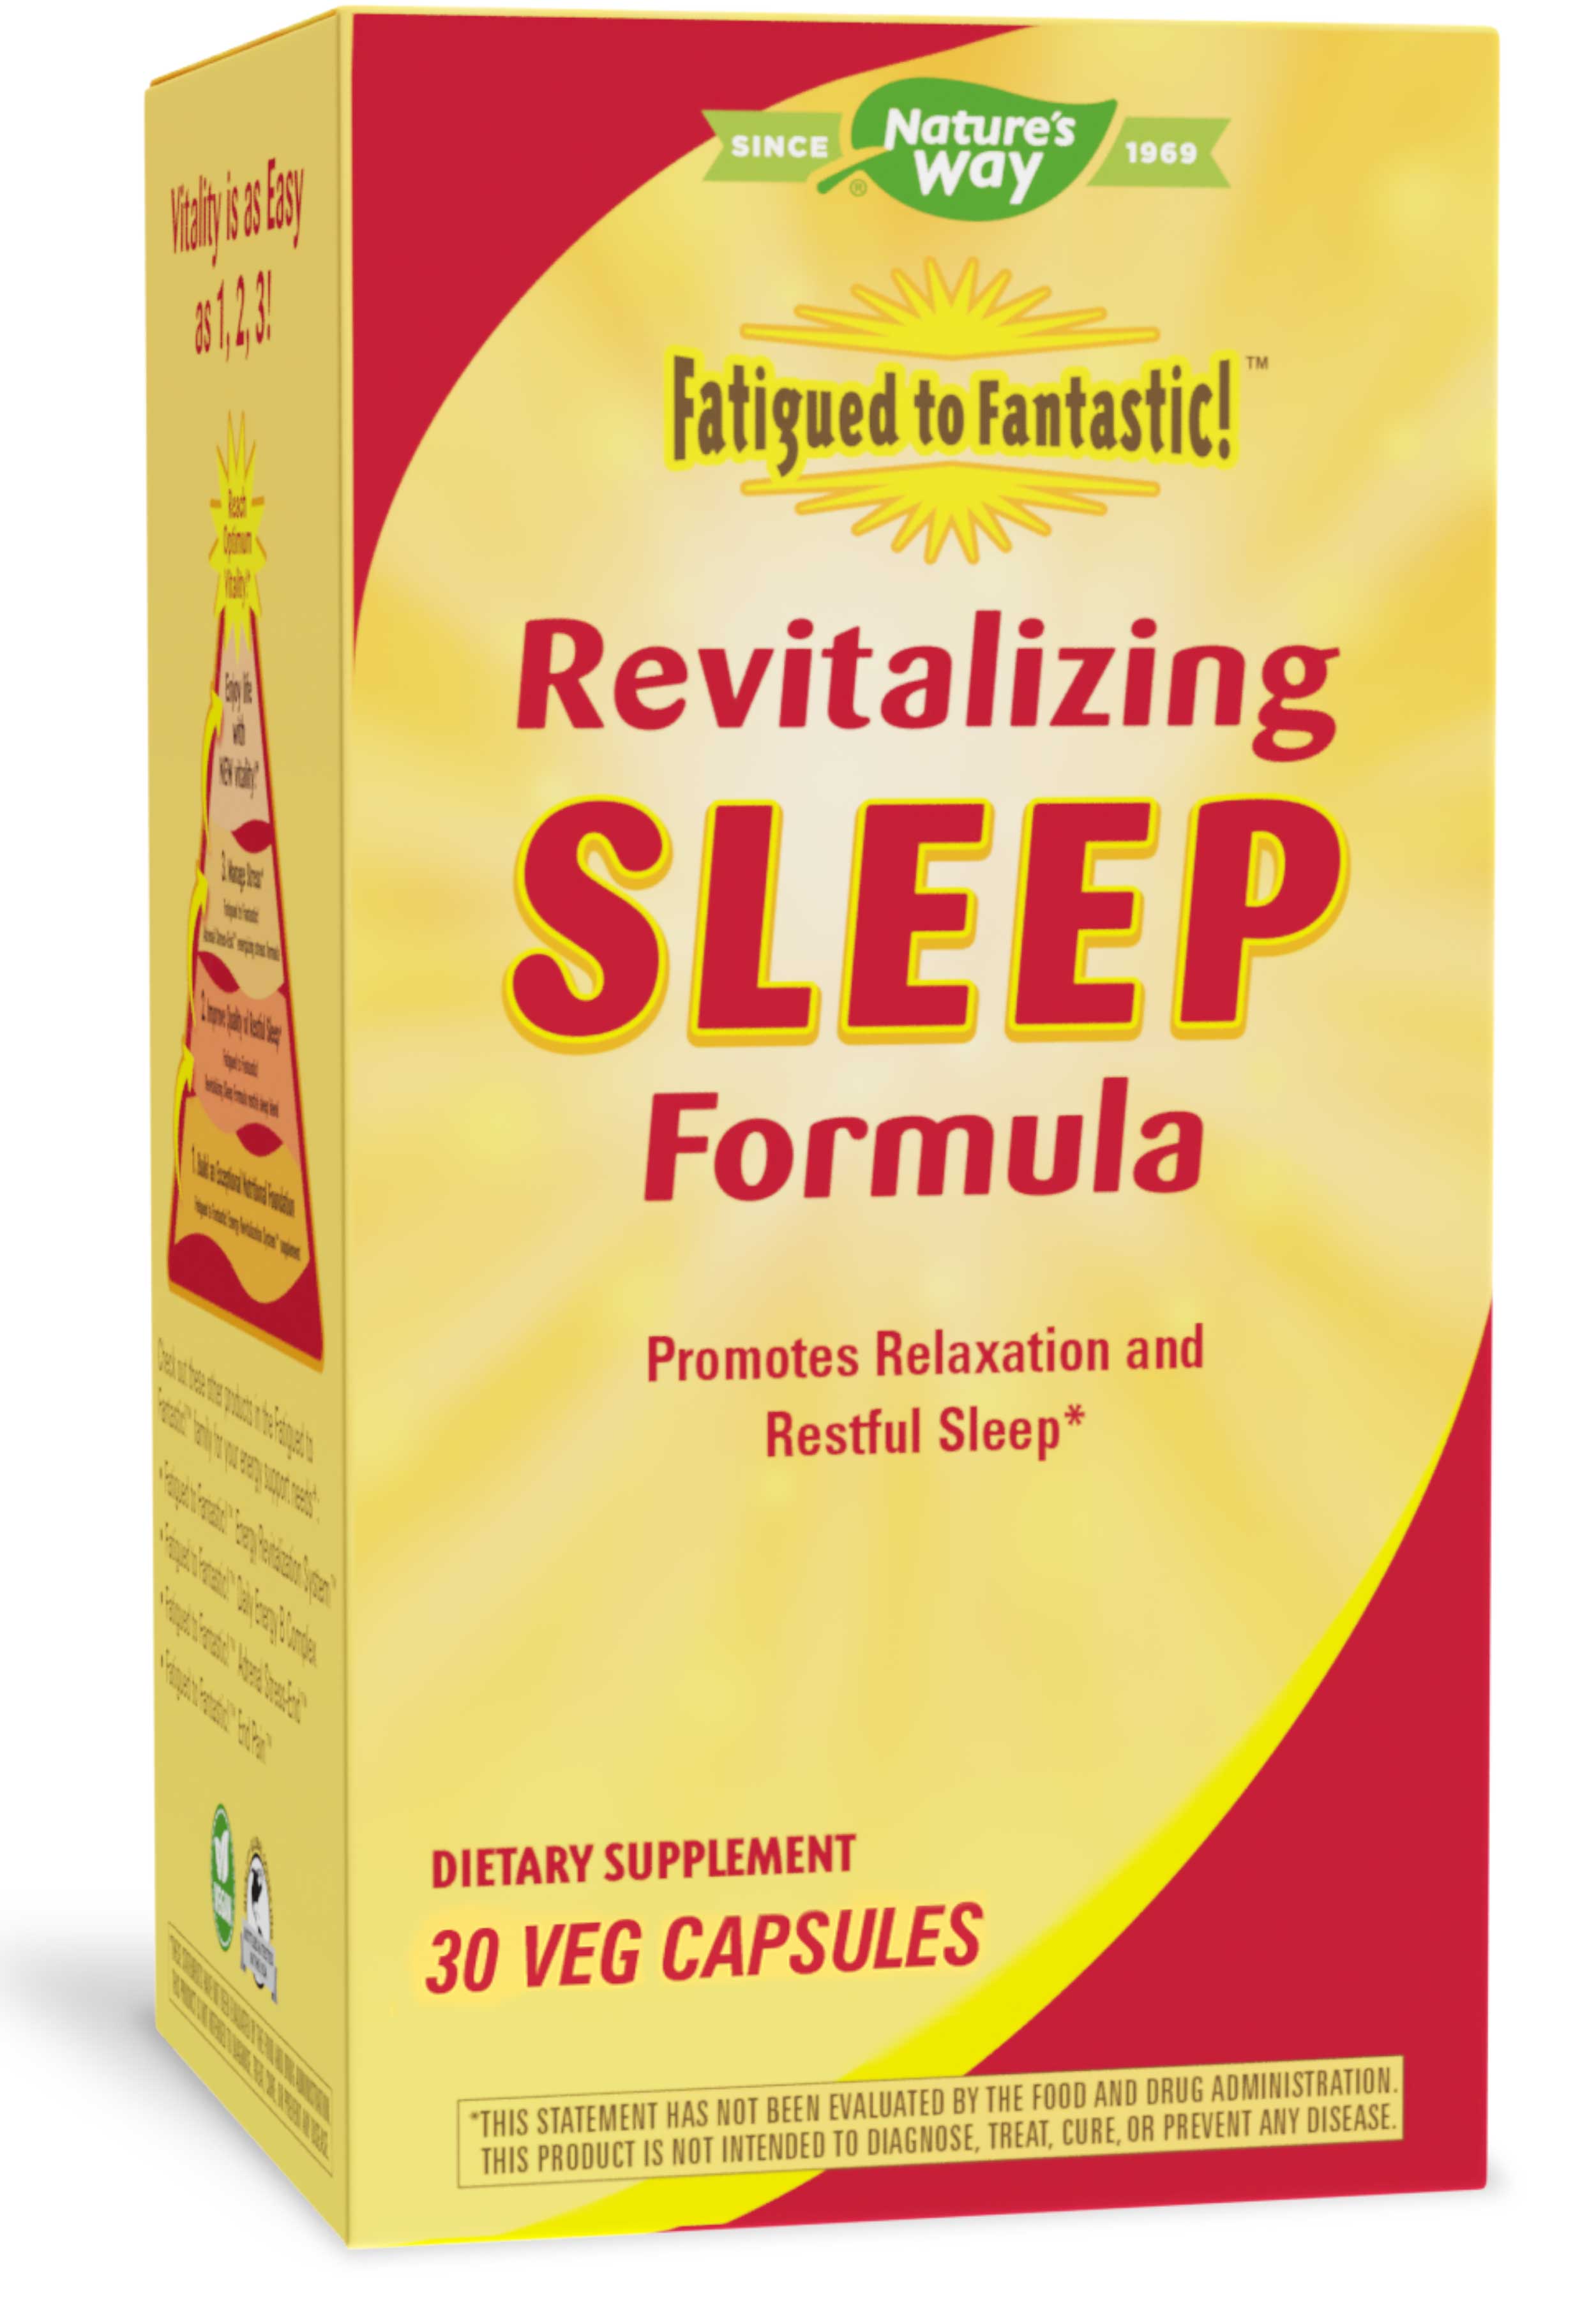 Nature's Way Fatigued to Fantastic! Revitalizing Sleep Formula